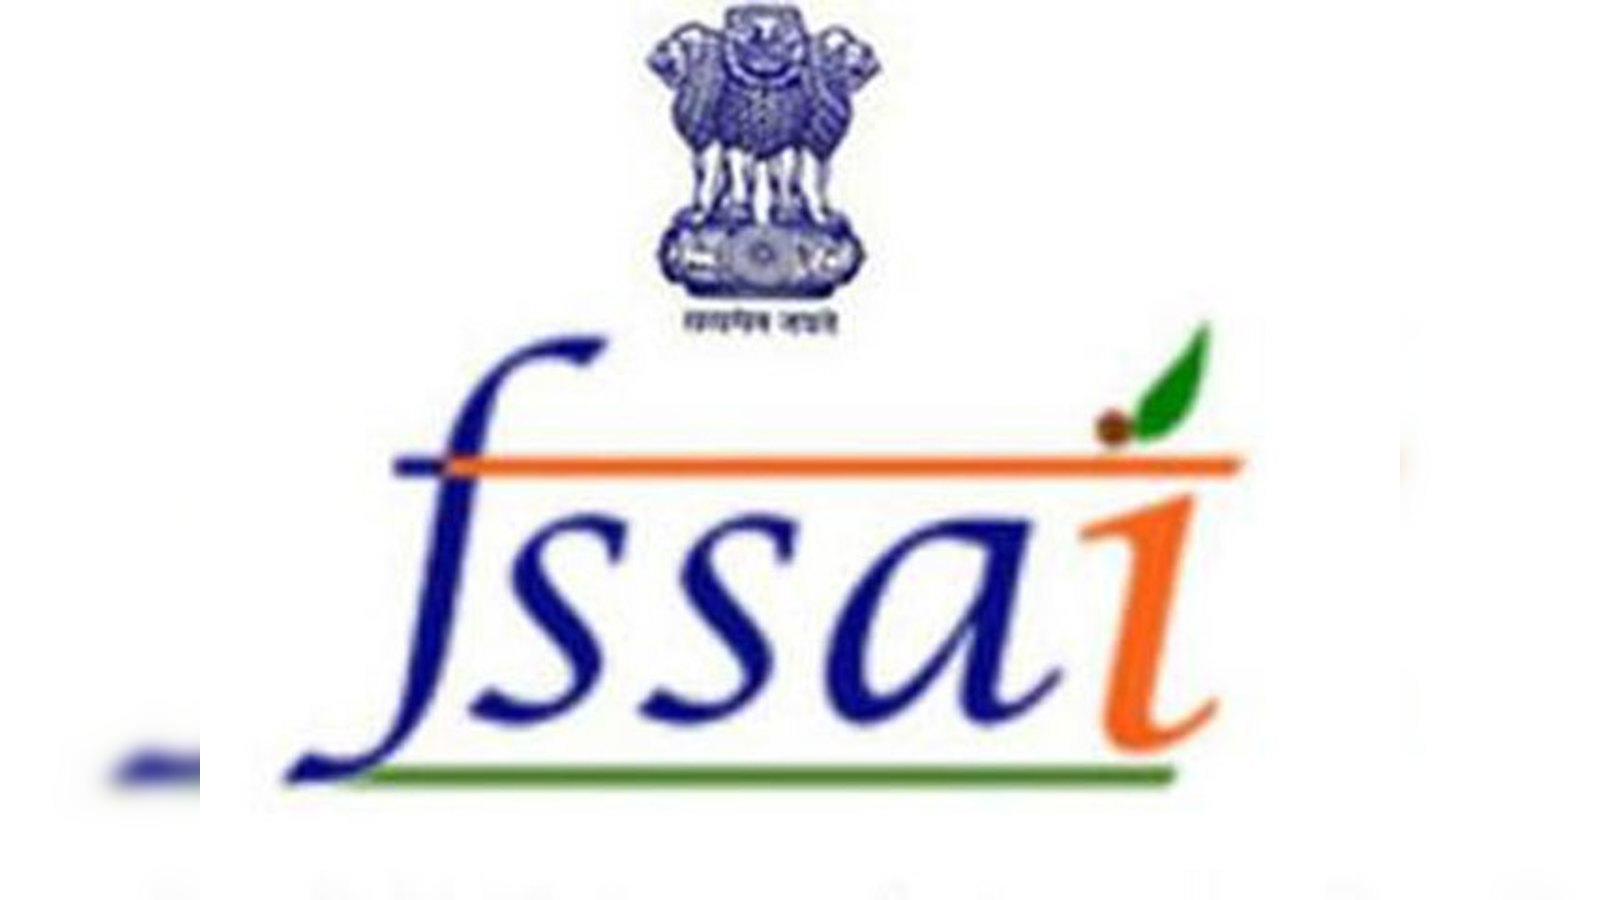 FSSAI License in India - Process, Eligibility, Documents - Biz Advisors